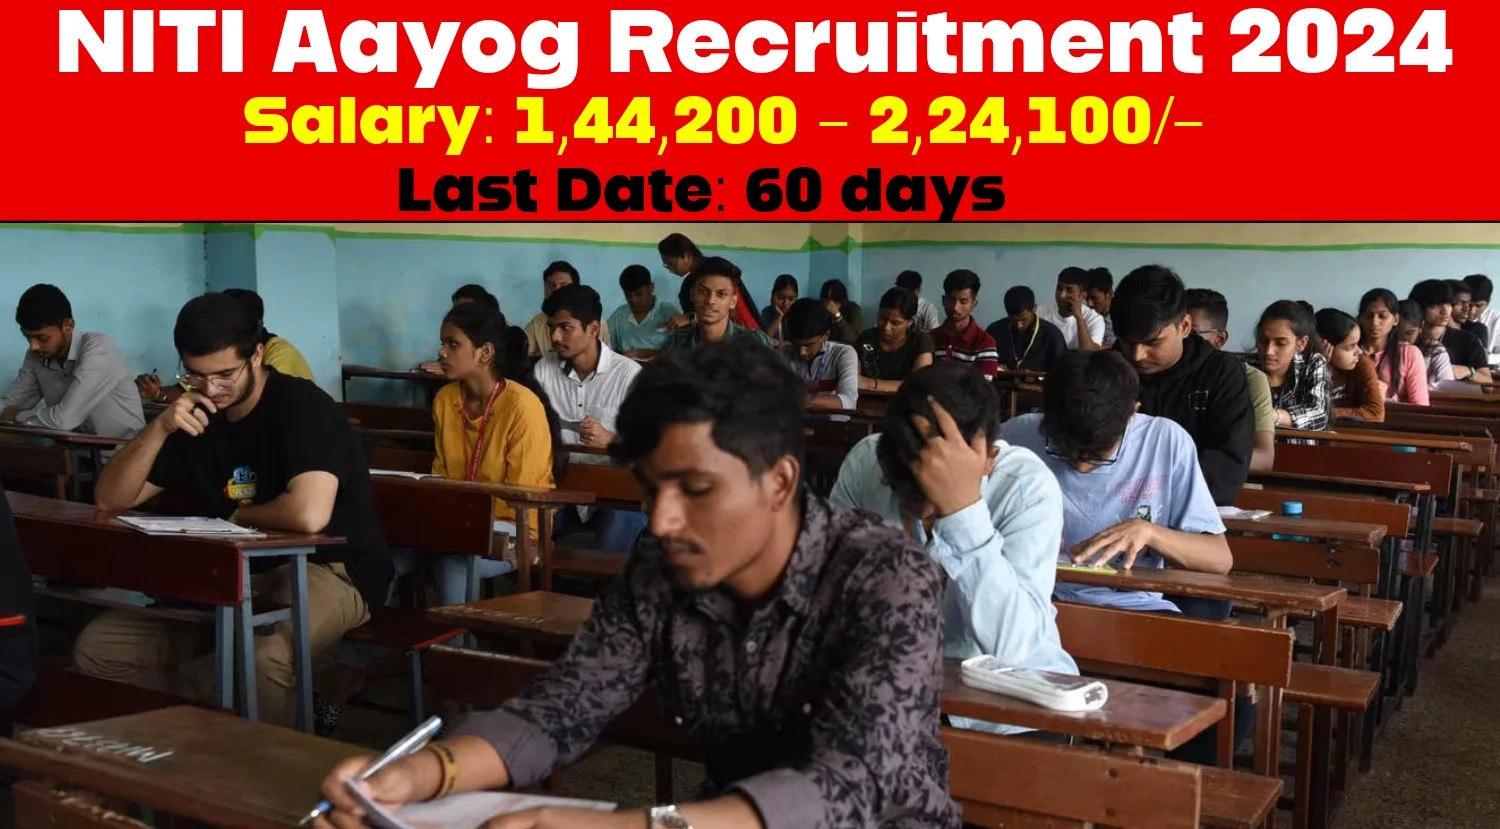 NITI Aayog Recruitment 2024